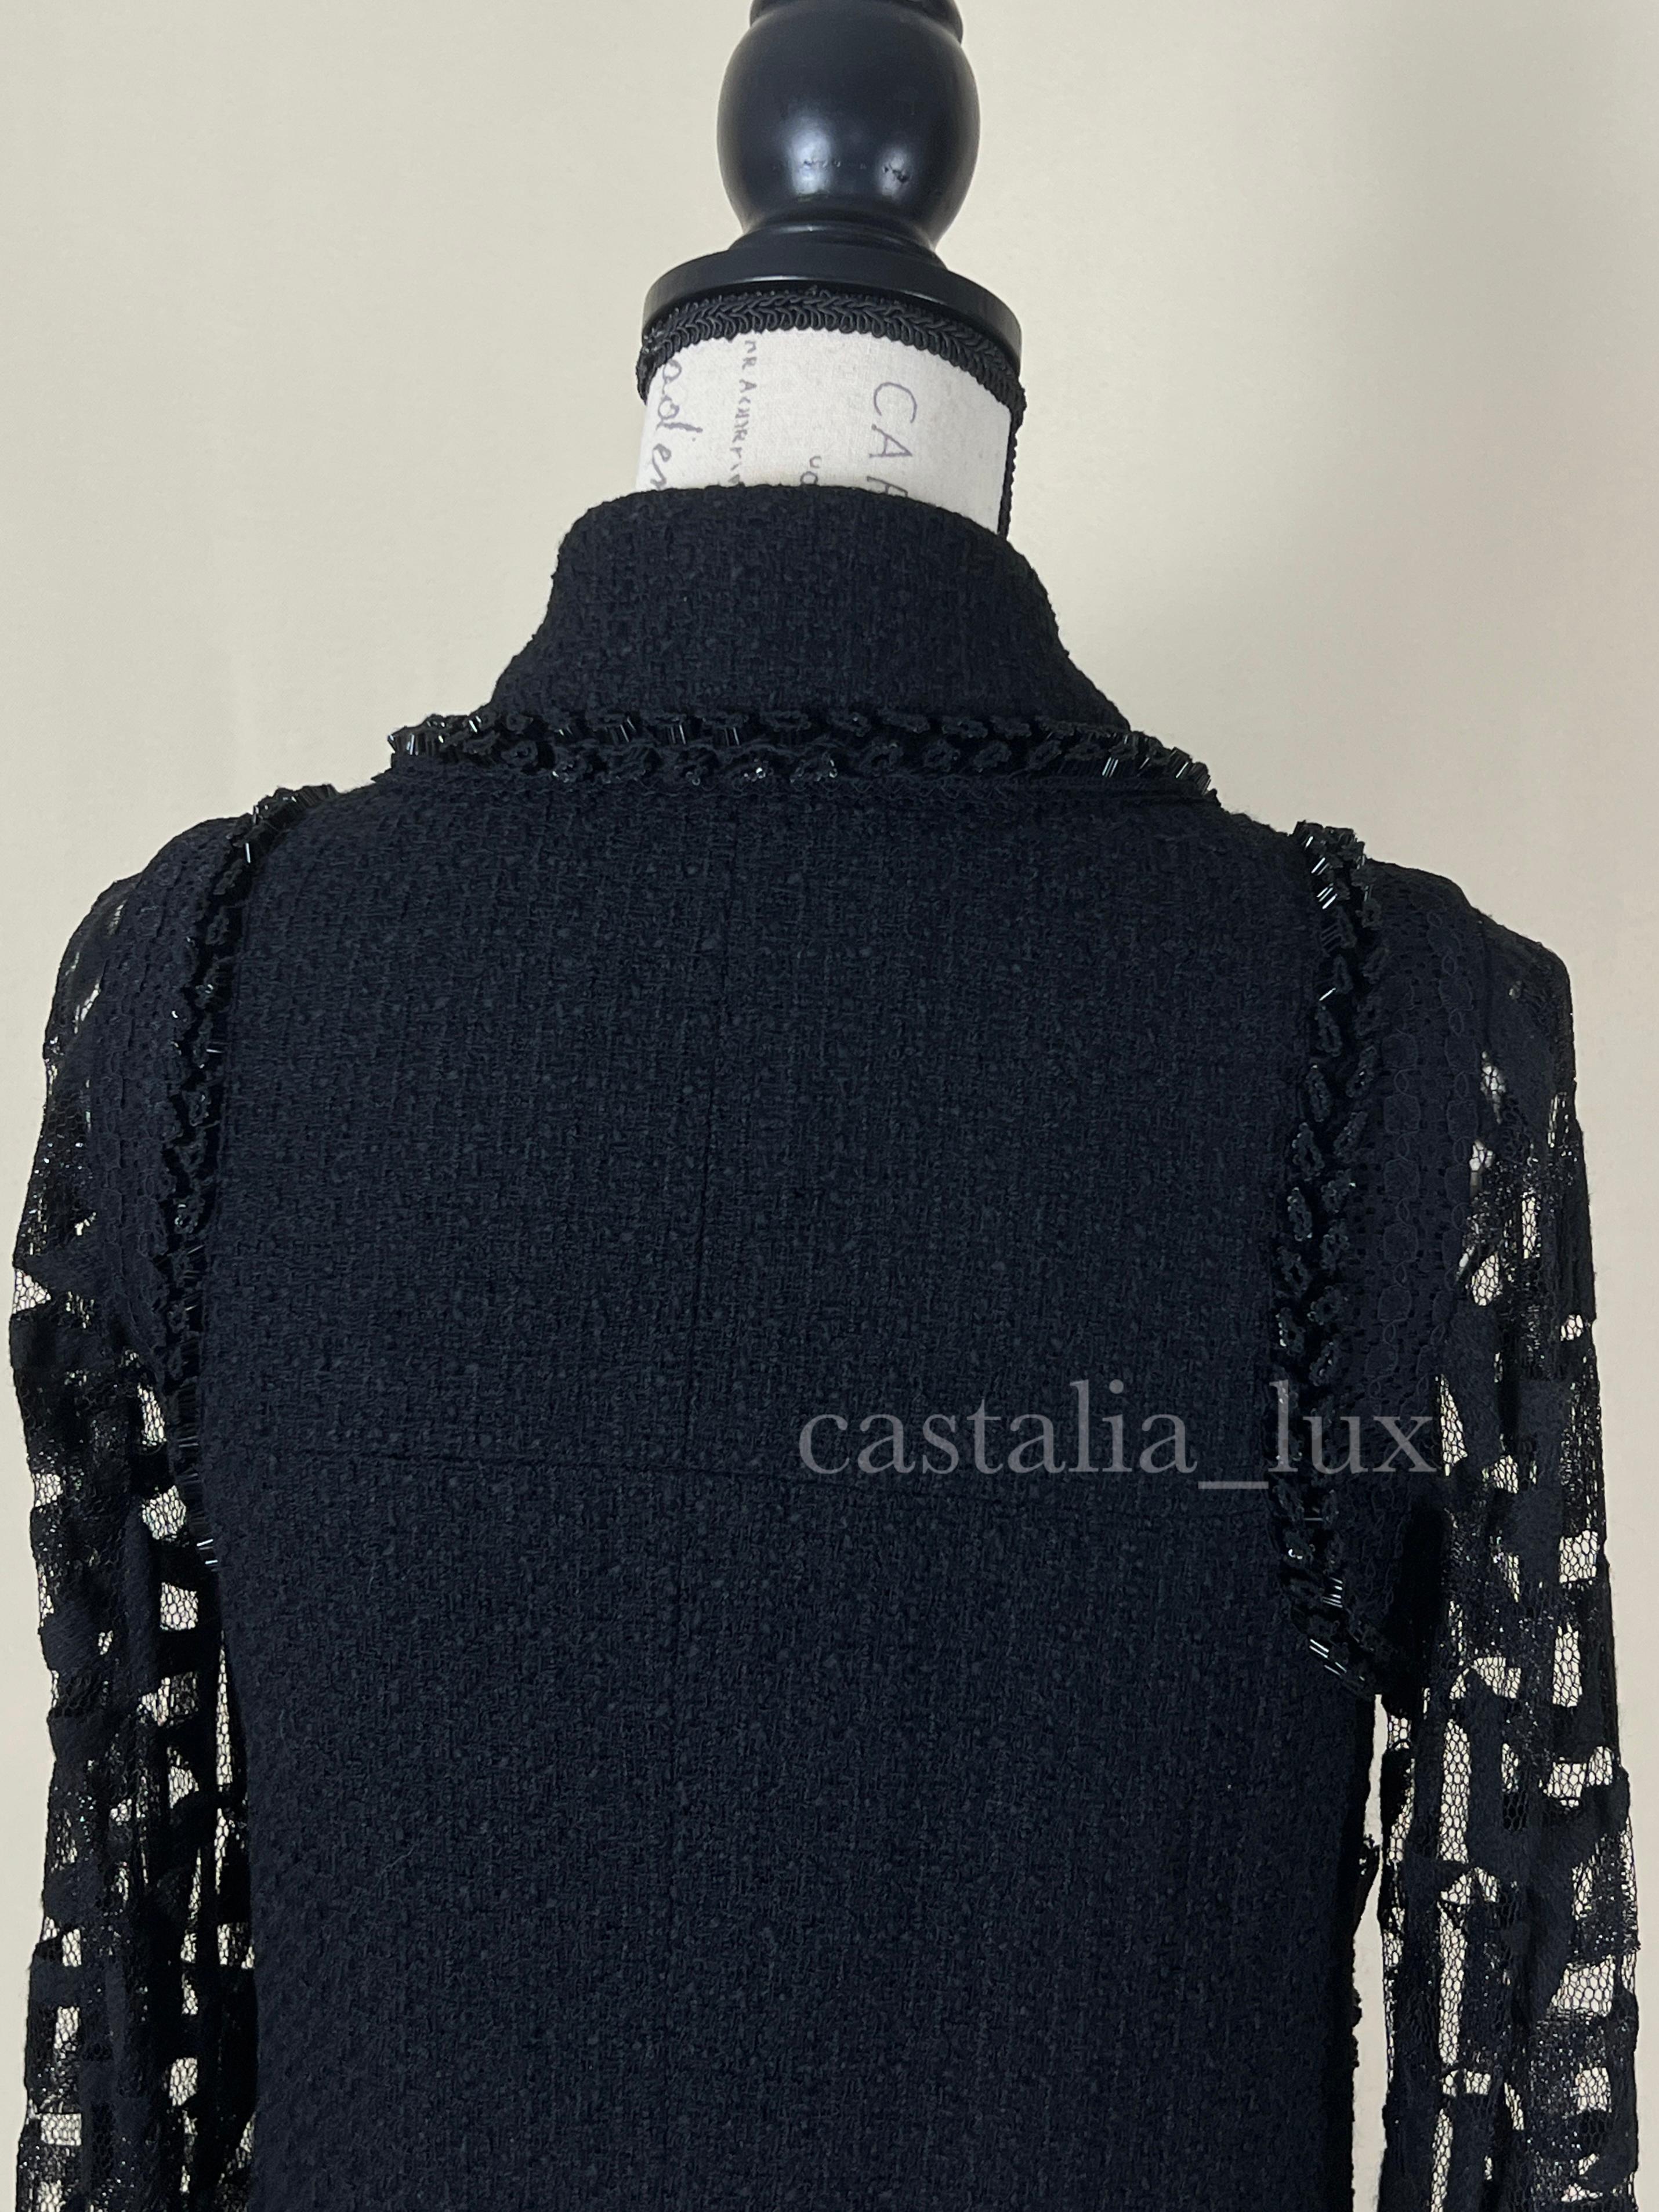 Chanel Paris / Miami CC Heart Buttons Black Tweed Jacket 12